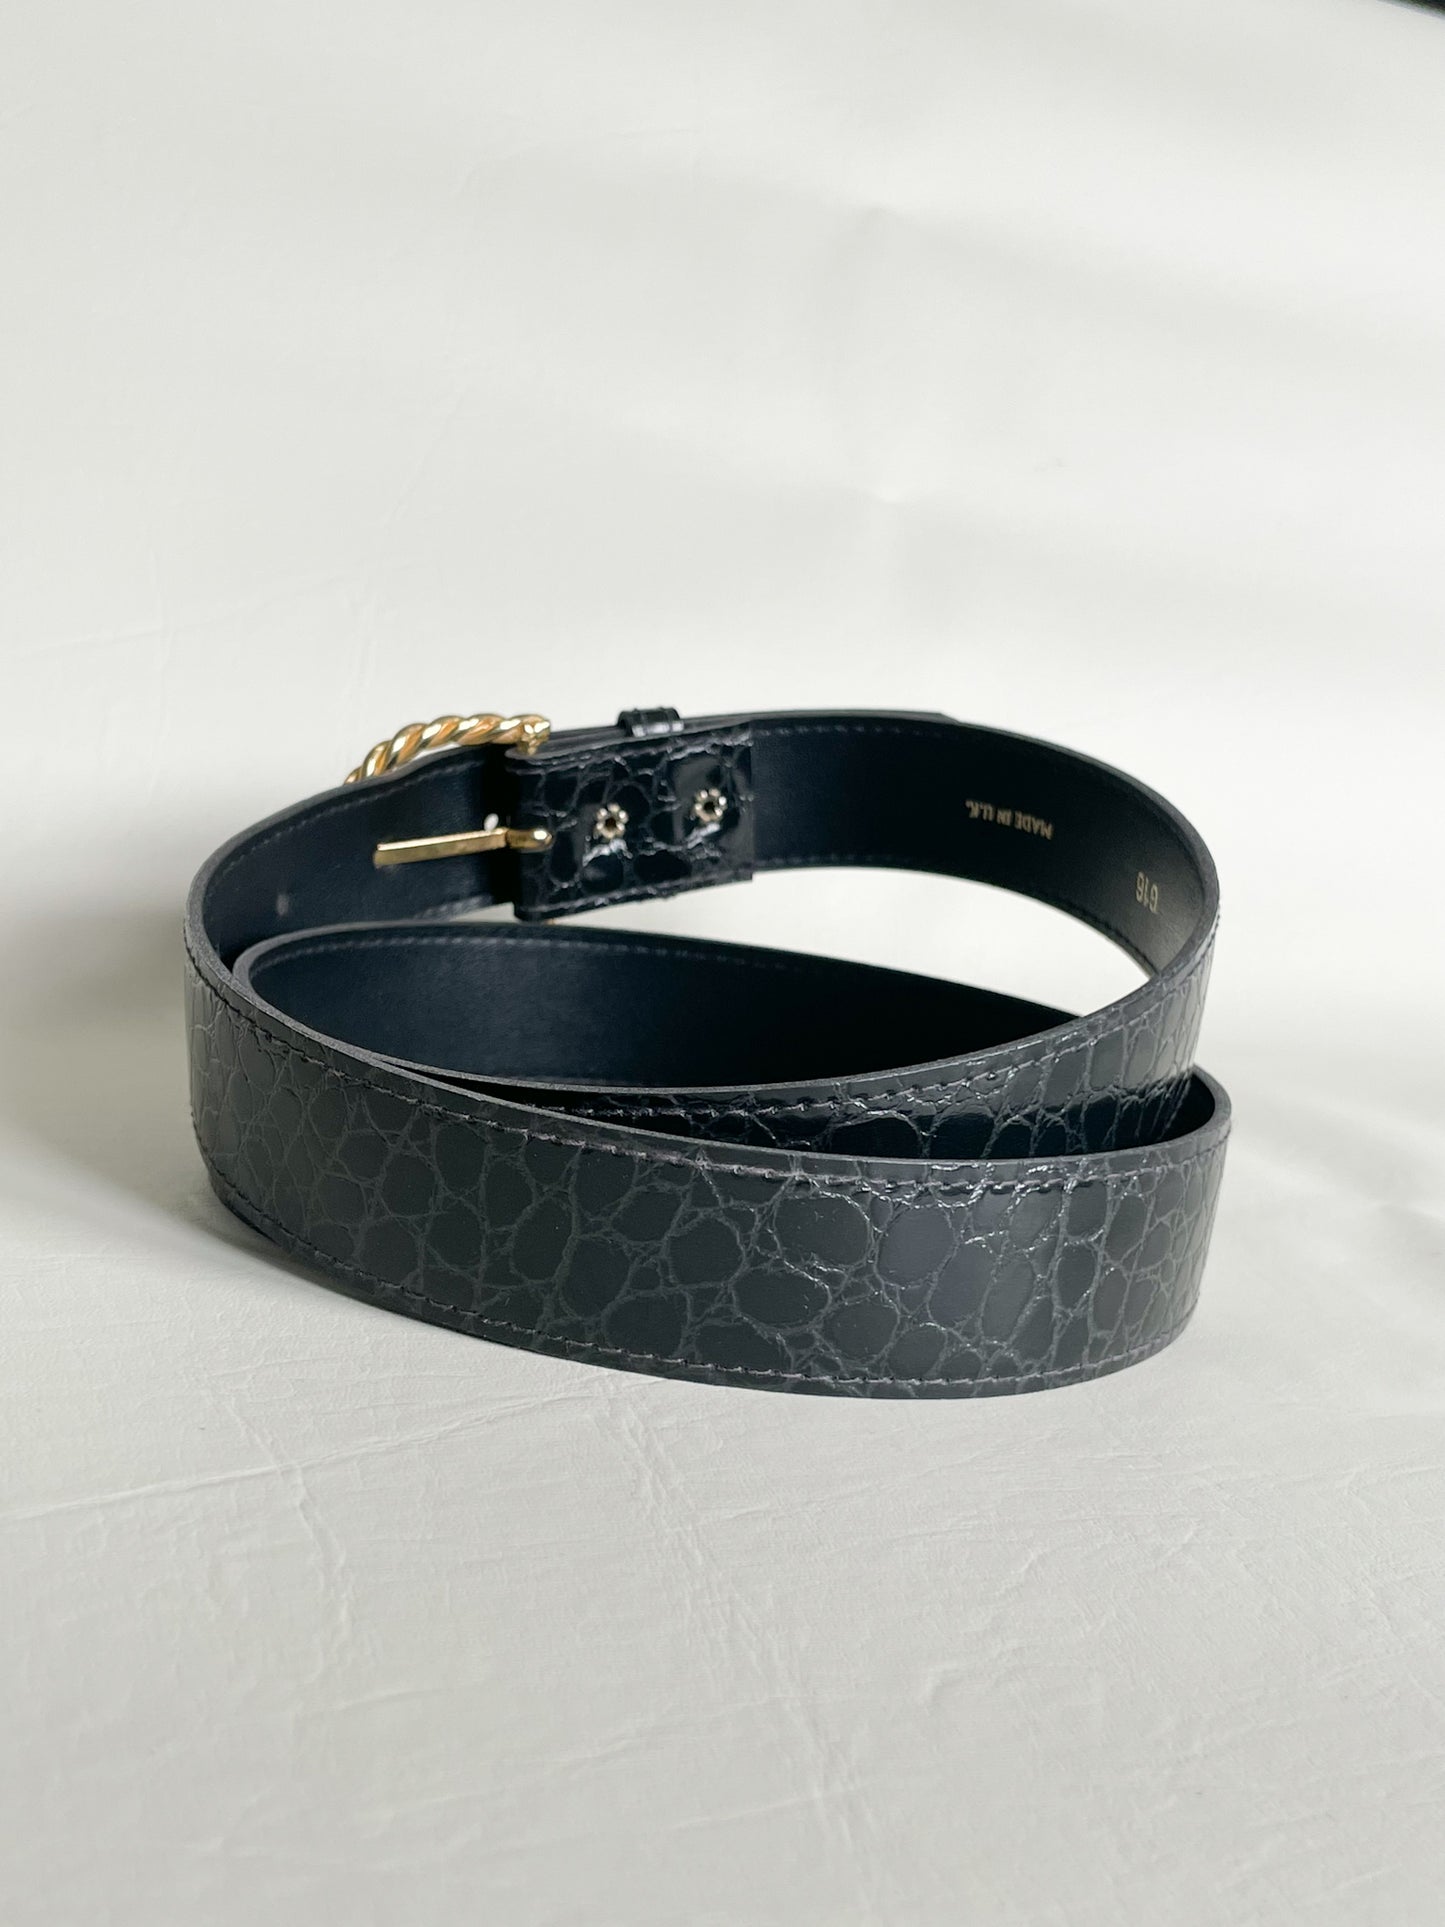 Vintage Black Faux Patent Leather Gold Rope Hardware Belt - Medium